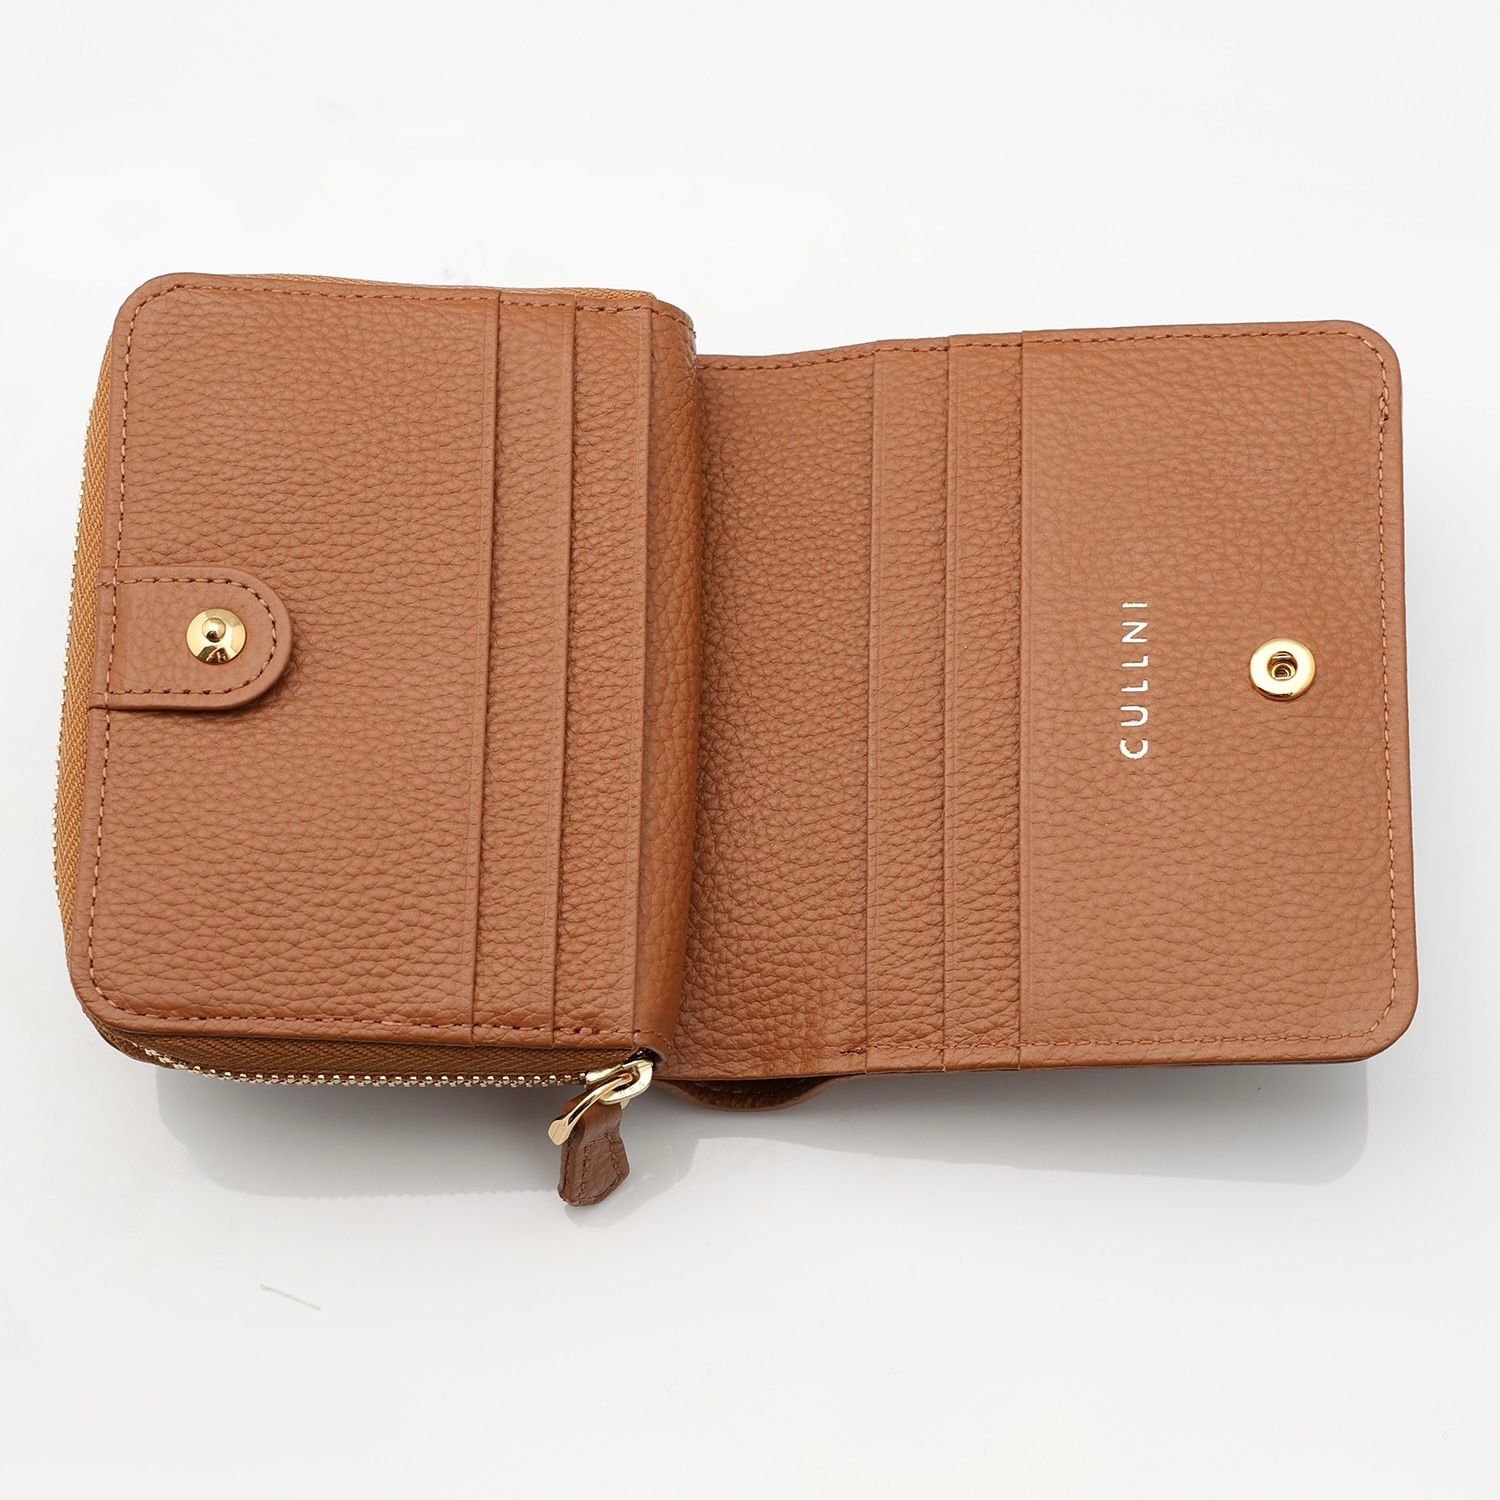 CULLNI - 【残り一点】Studded Leather Mini Wallet | ACRMTSM ONLINE